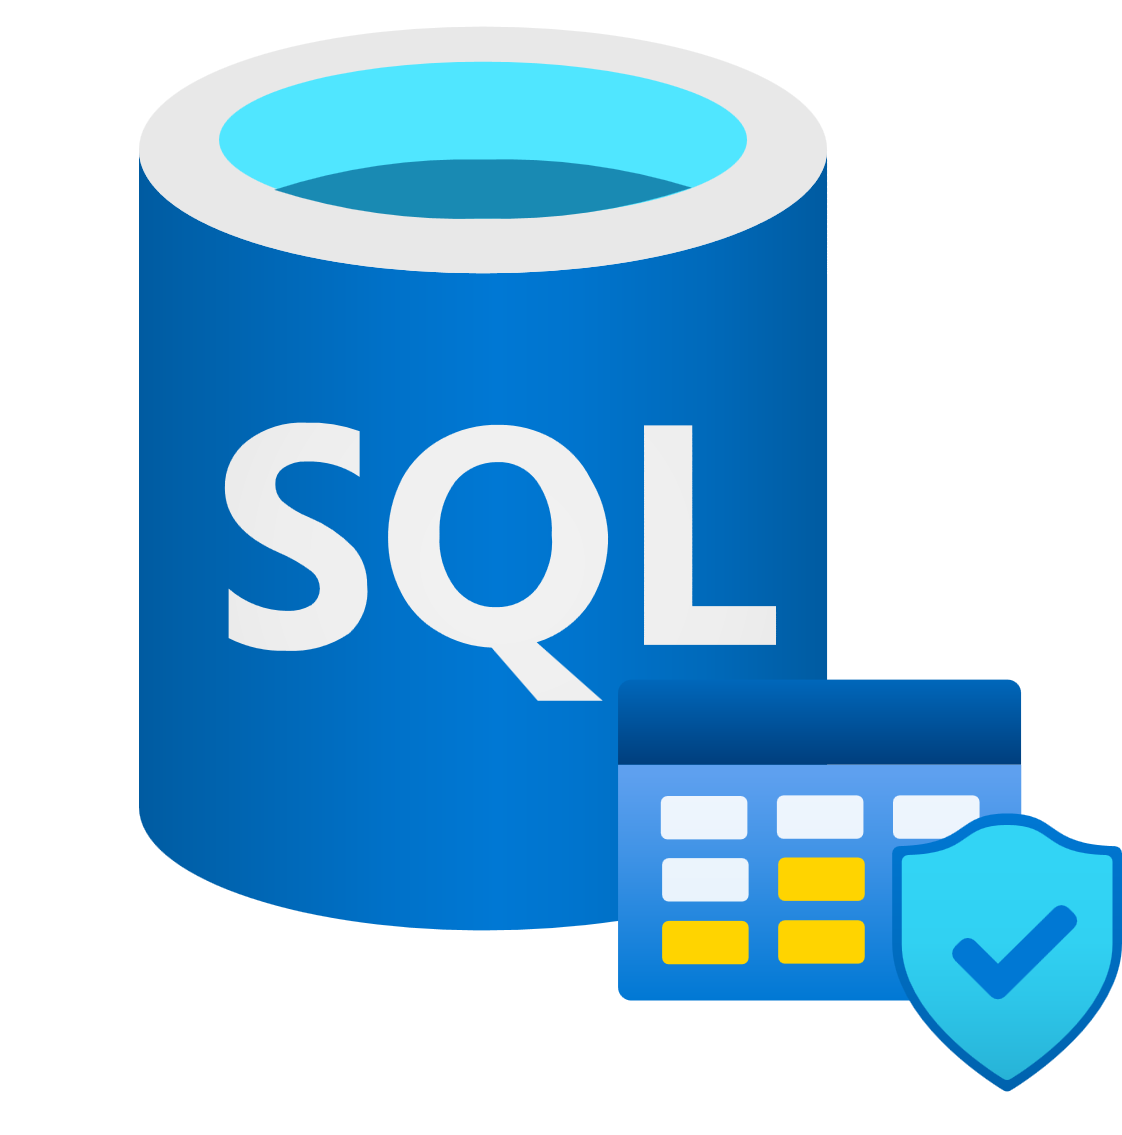 Sql Database Logo